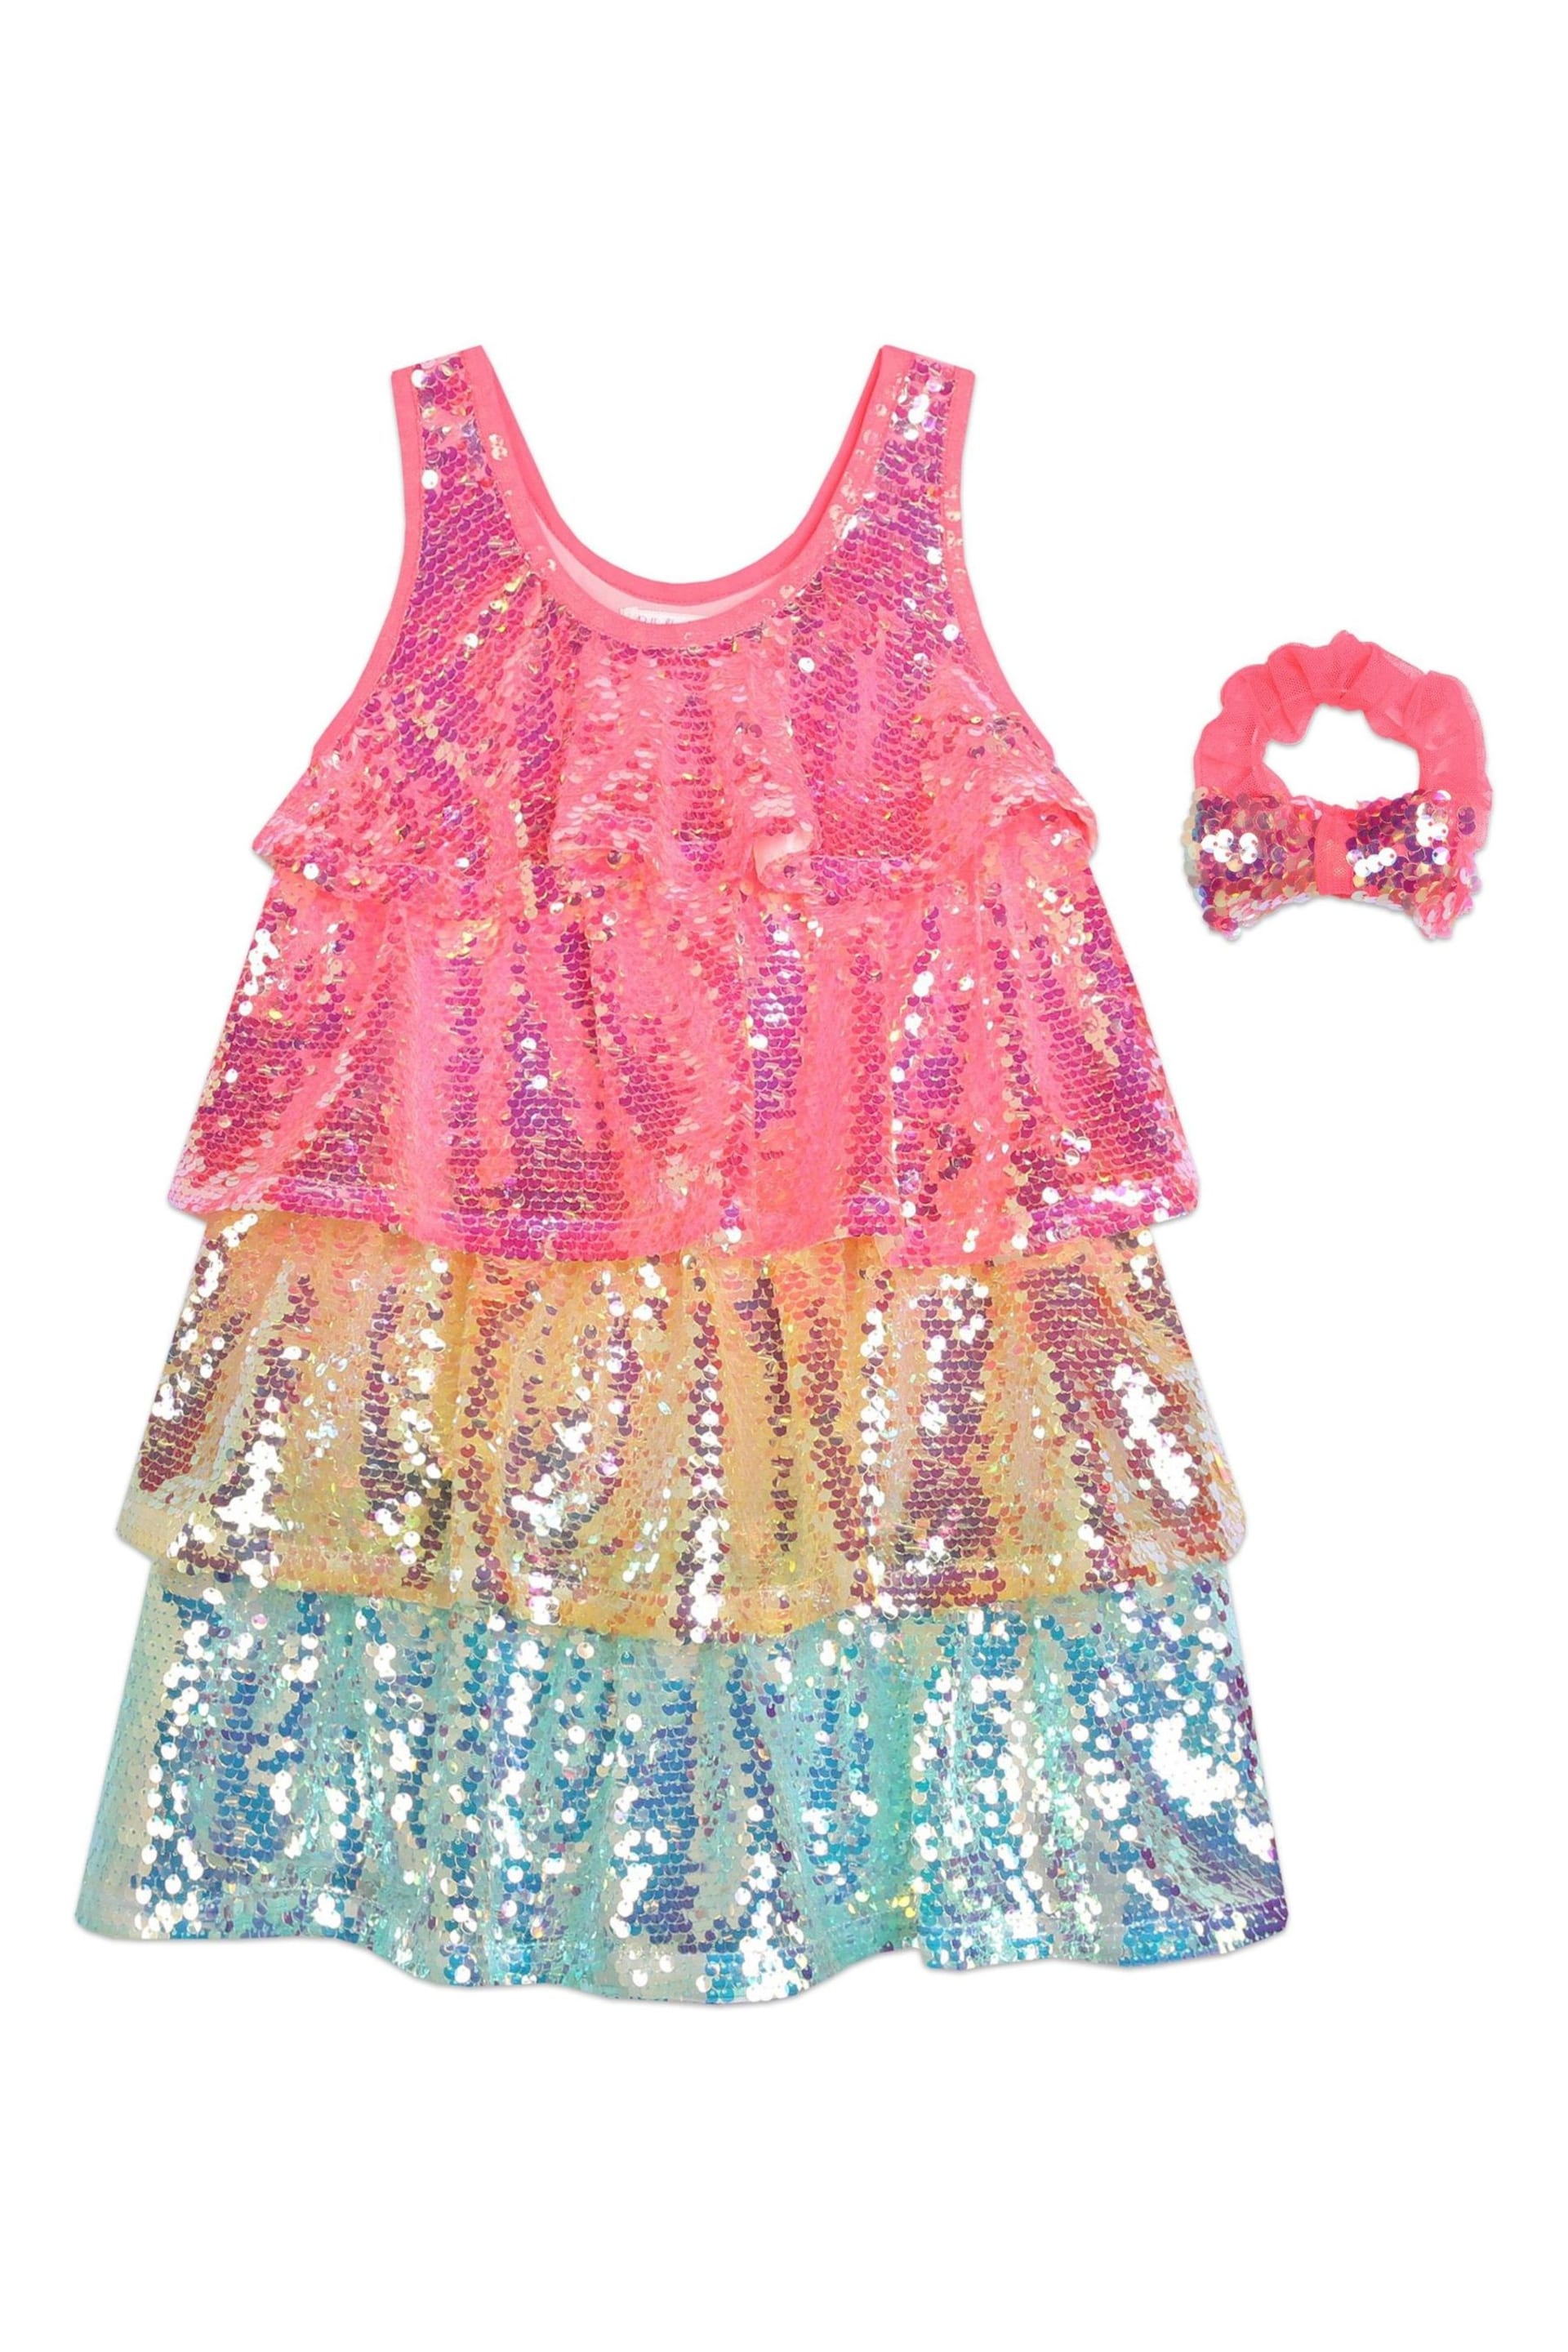 Billieblush Pink Colourblock Sequin Party Dress & Scrunchie Set - Image 3 of 5